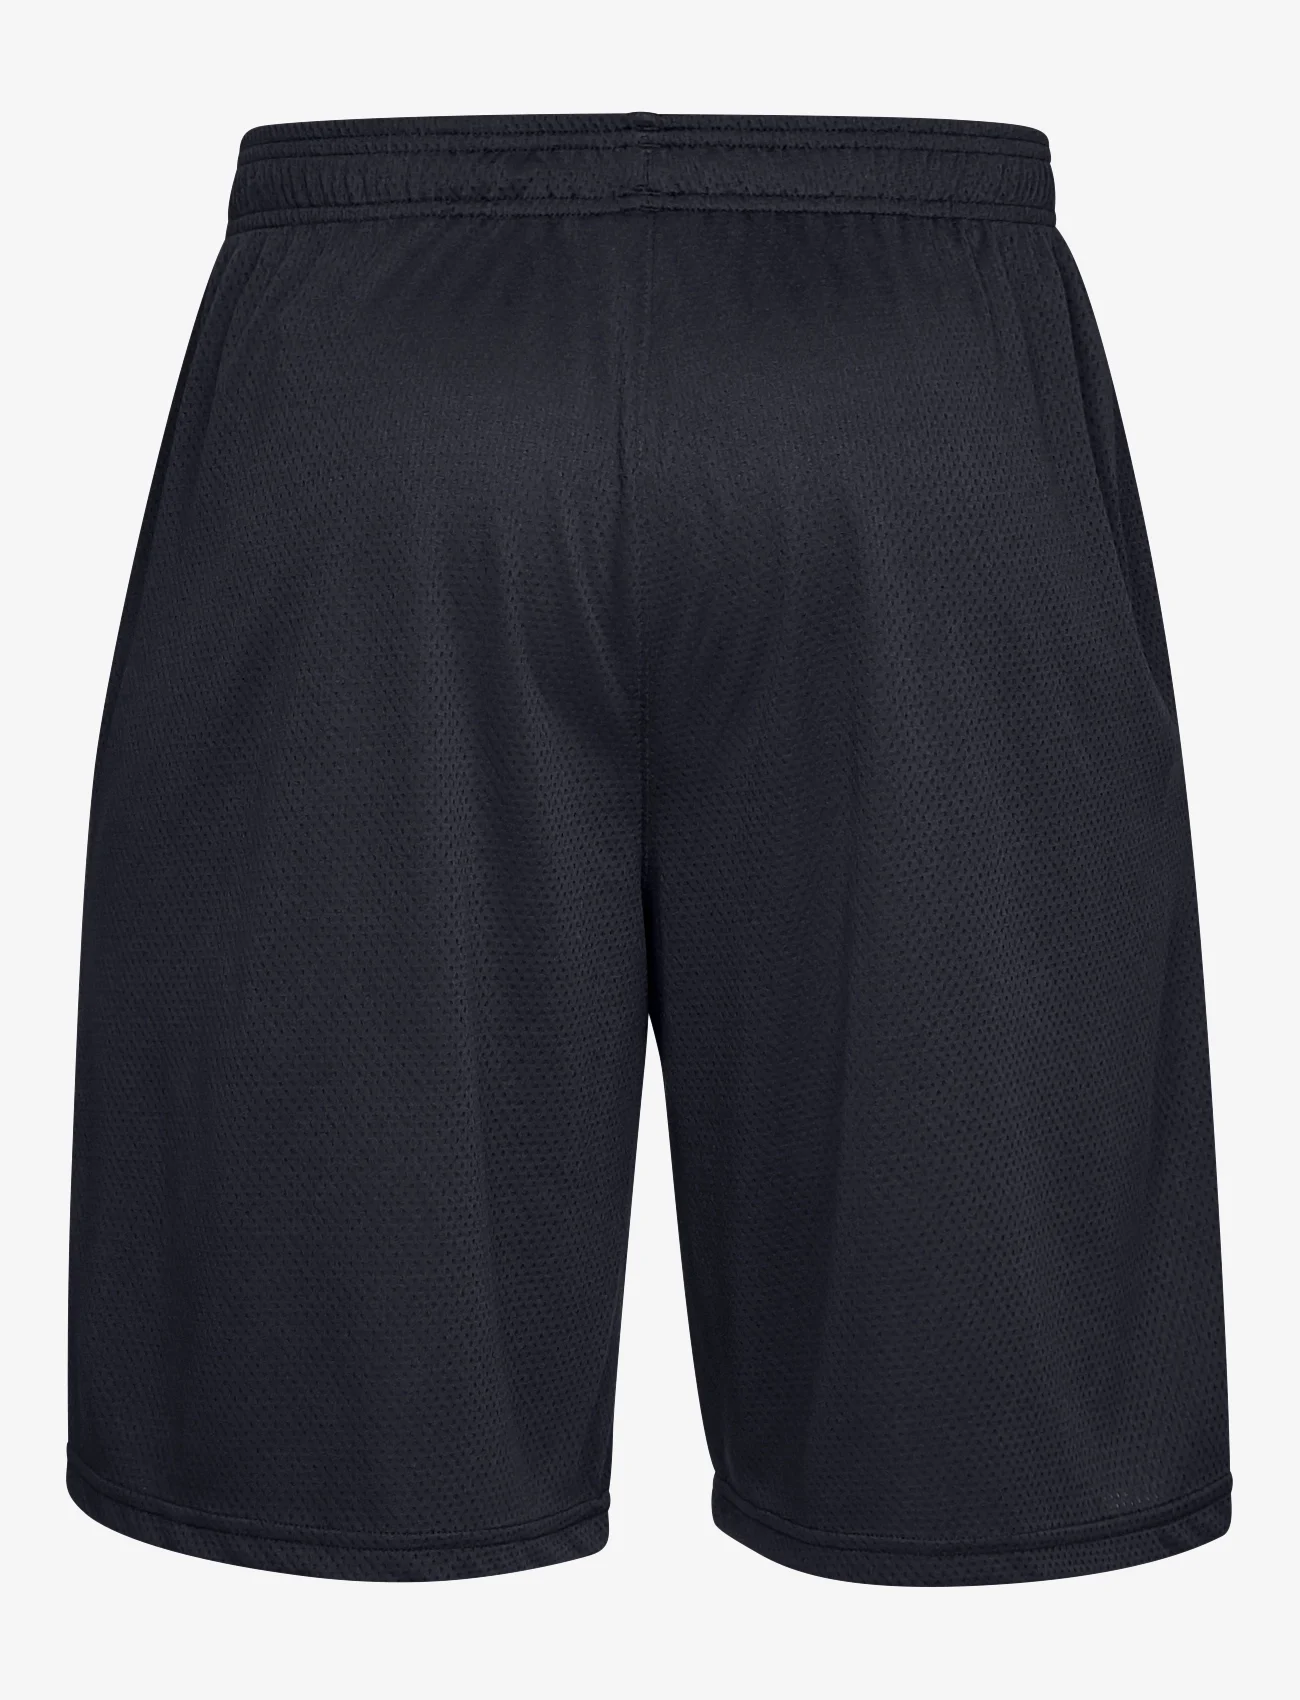 Under Armour - UA Tech Mesh Shorts - training shorts - black - 1